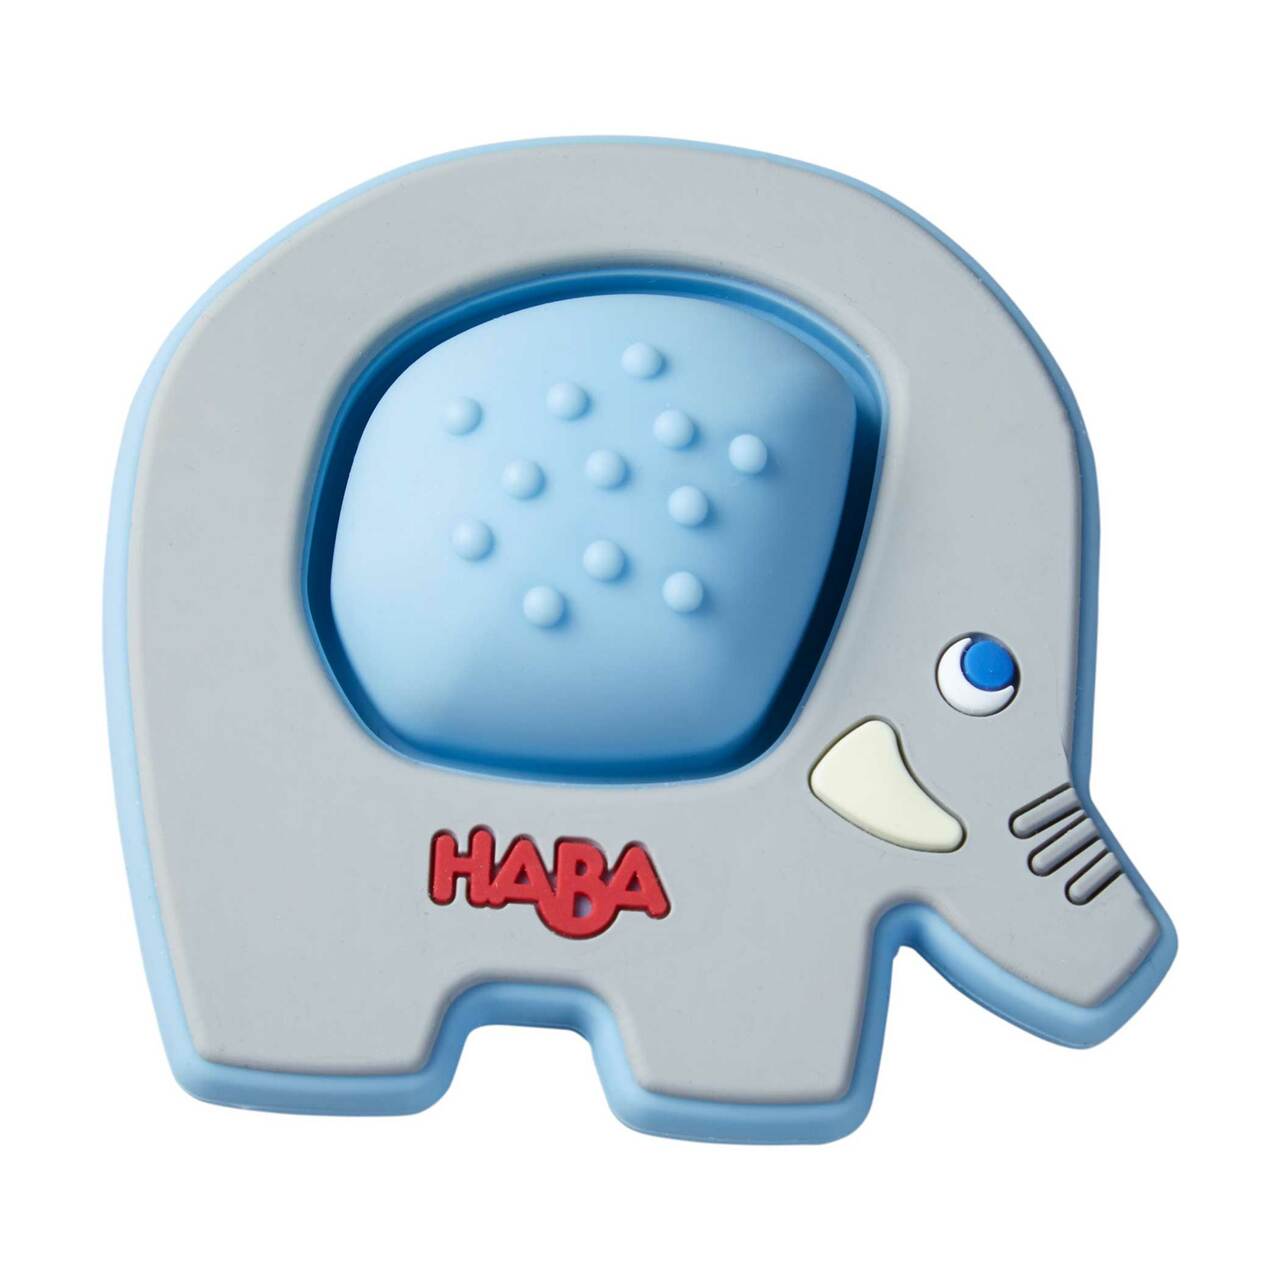 haba popping elephant teether regular